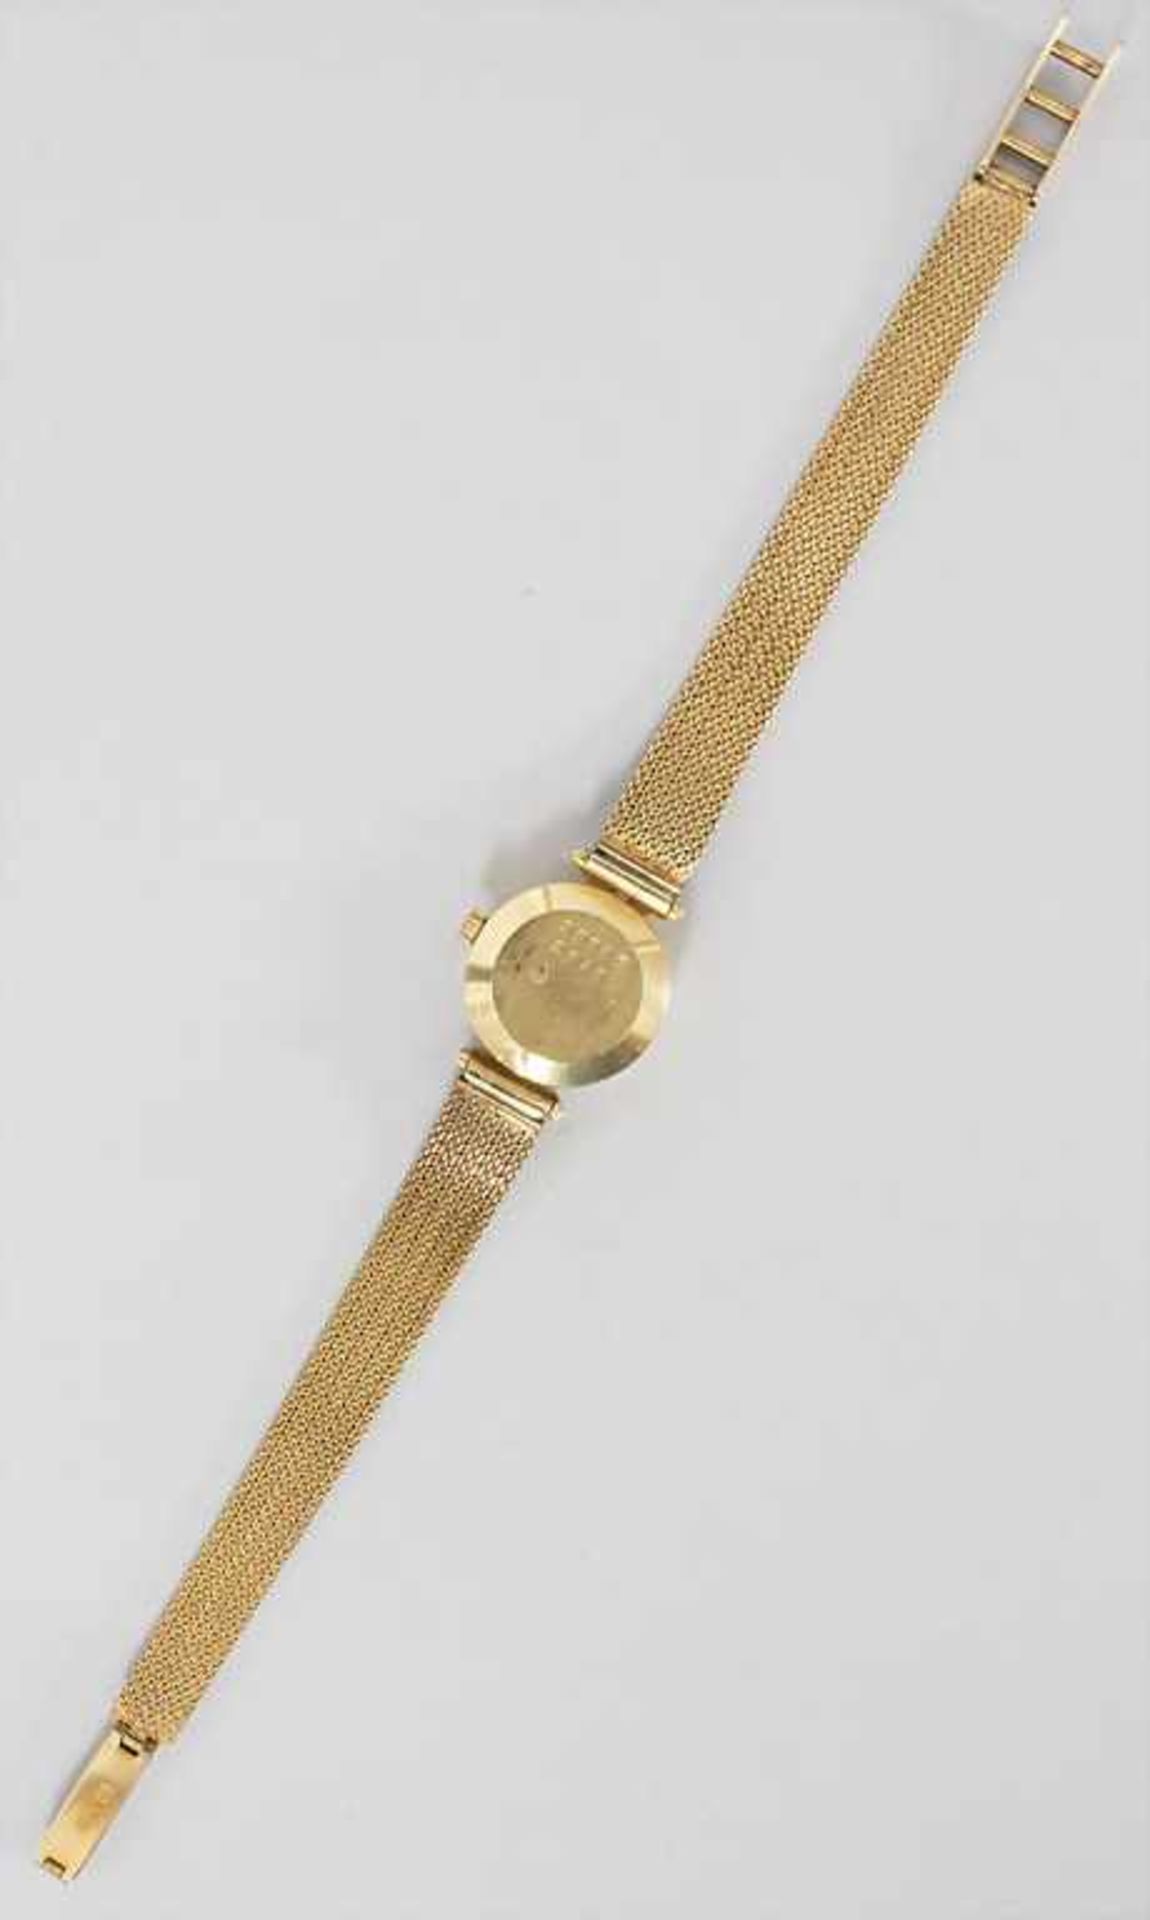 Damenarmbanduhr in Gold / A ladies watch in gold, PRECIMAX, um 1965 - Image 3 of 4